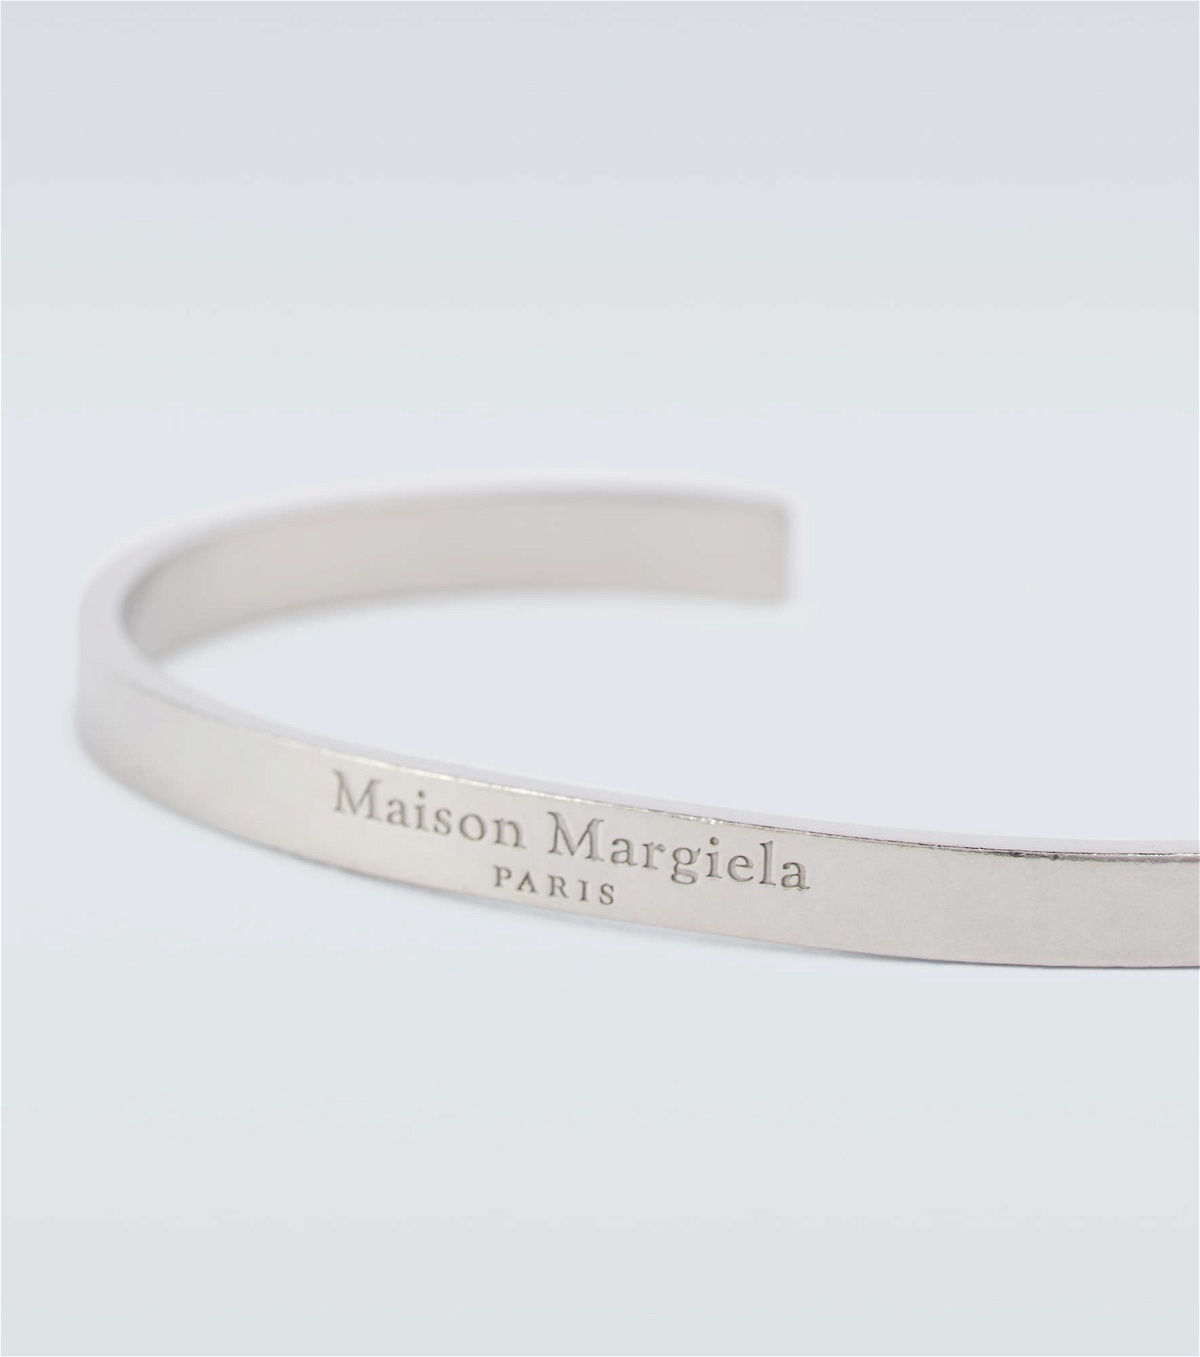 Maison Margiela - Logo sterling silver cuff bracelet Maison Margiela